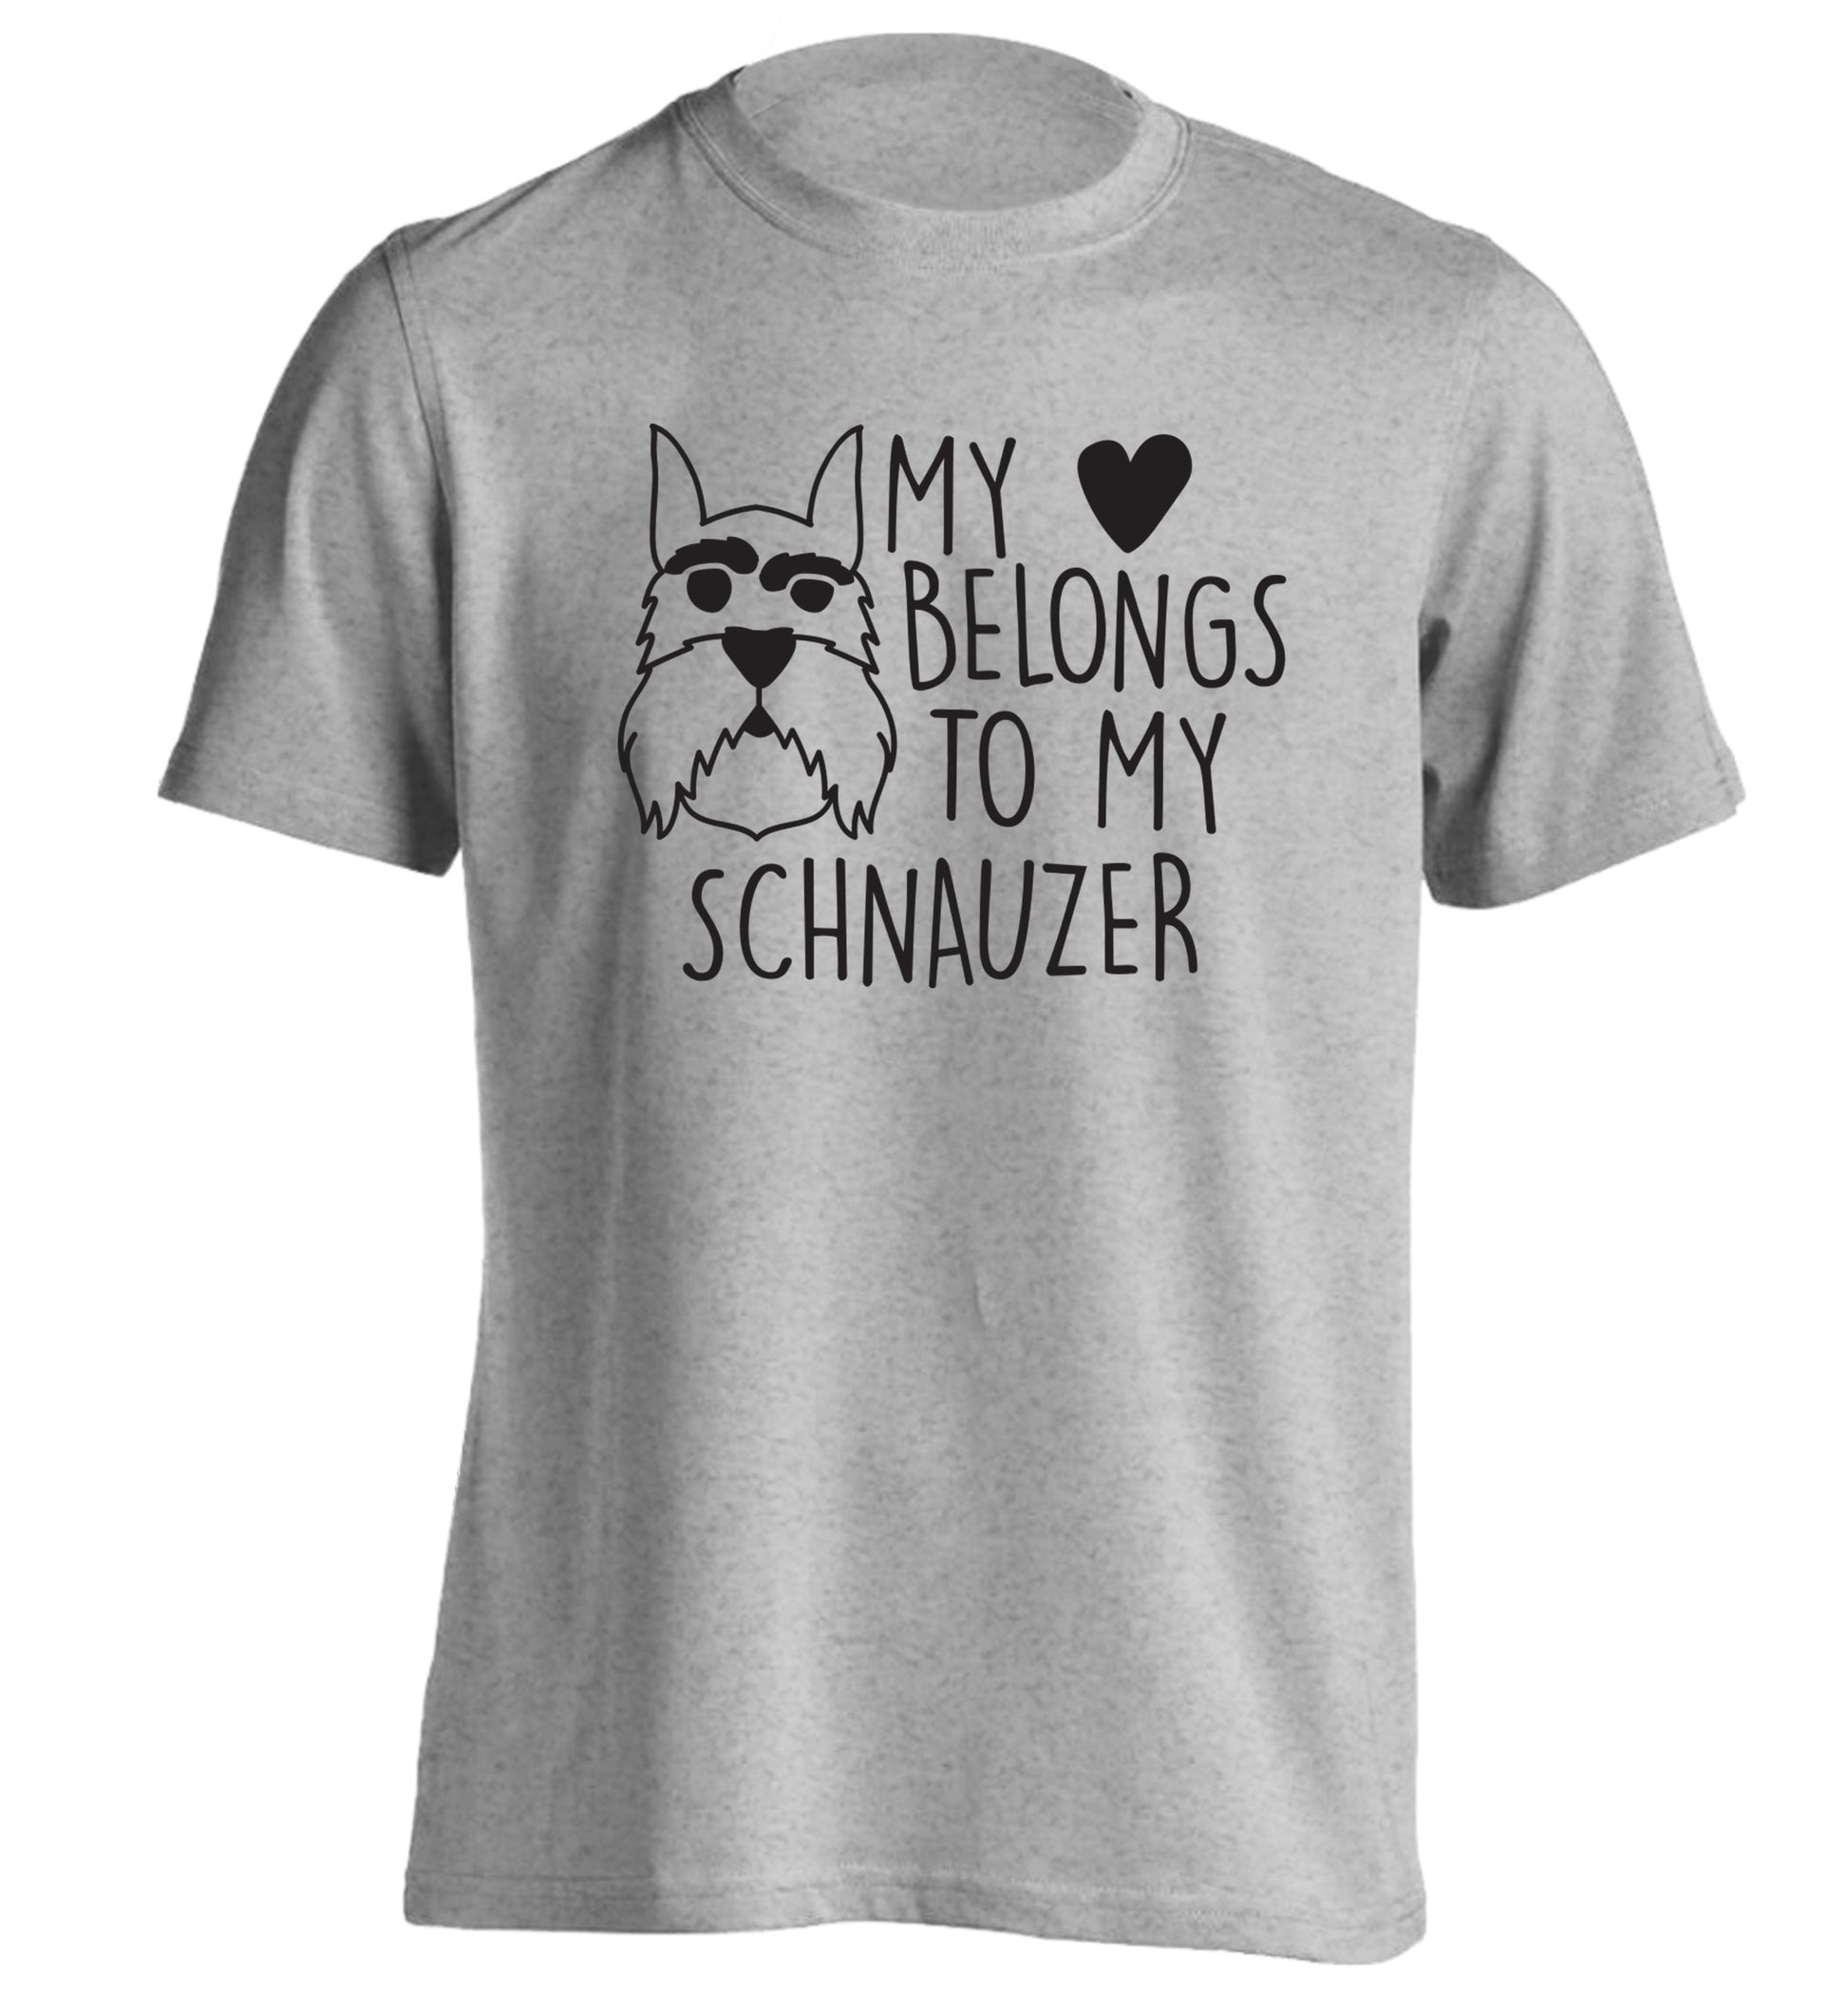 My heart belongs to my schnauzer adults unisex grey Tshirt 2XL